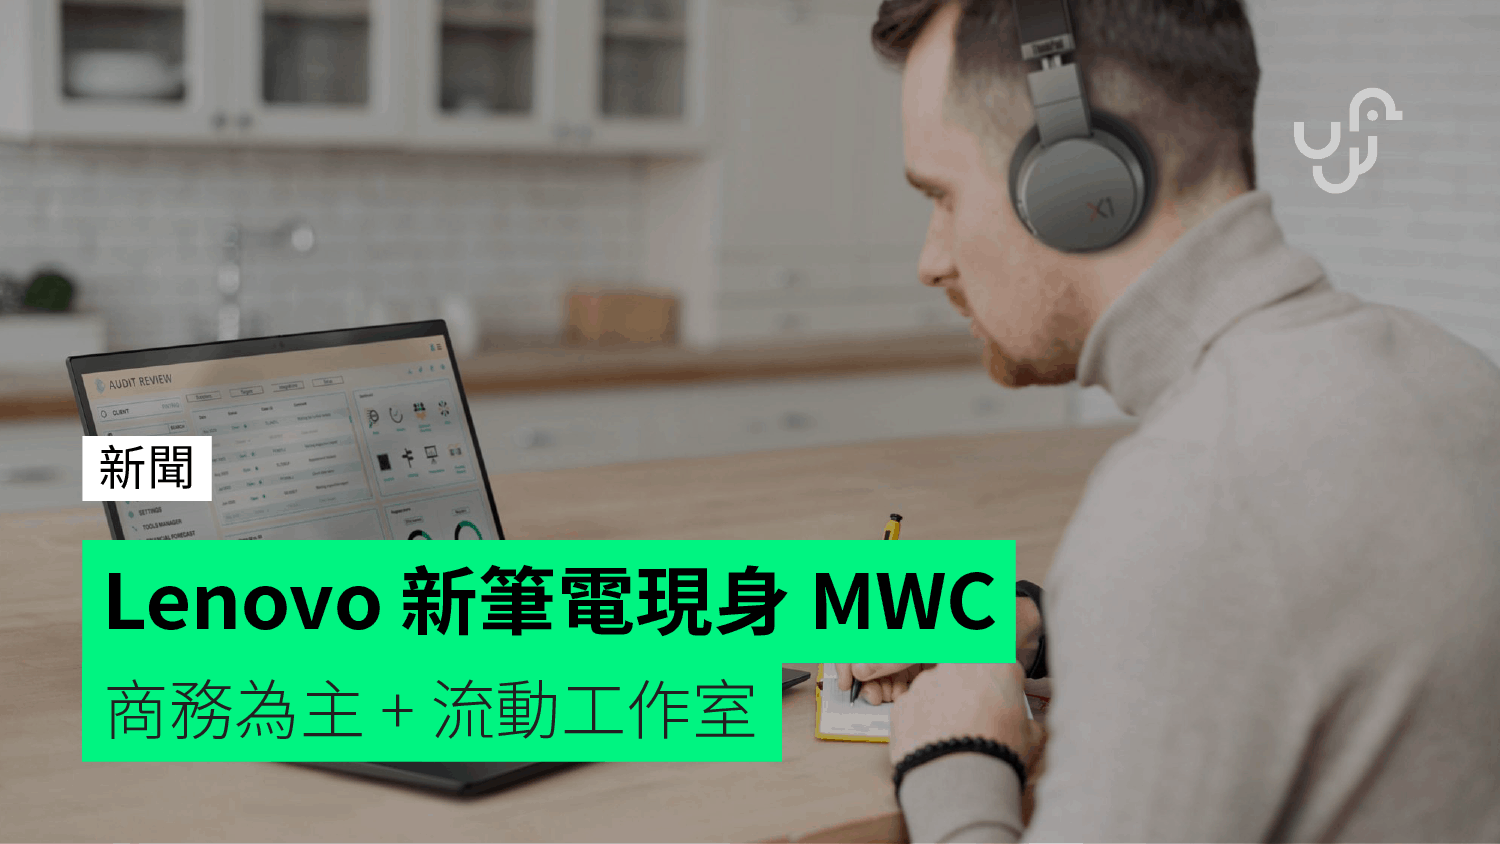 MWC 2021】Lenovo 發佈新商務筆電平板顯示器配件系列- 香港unwire.hk